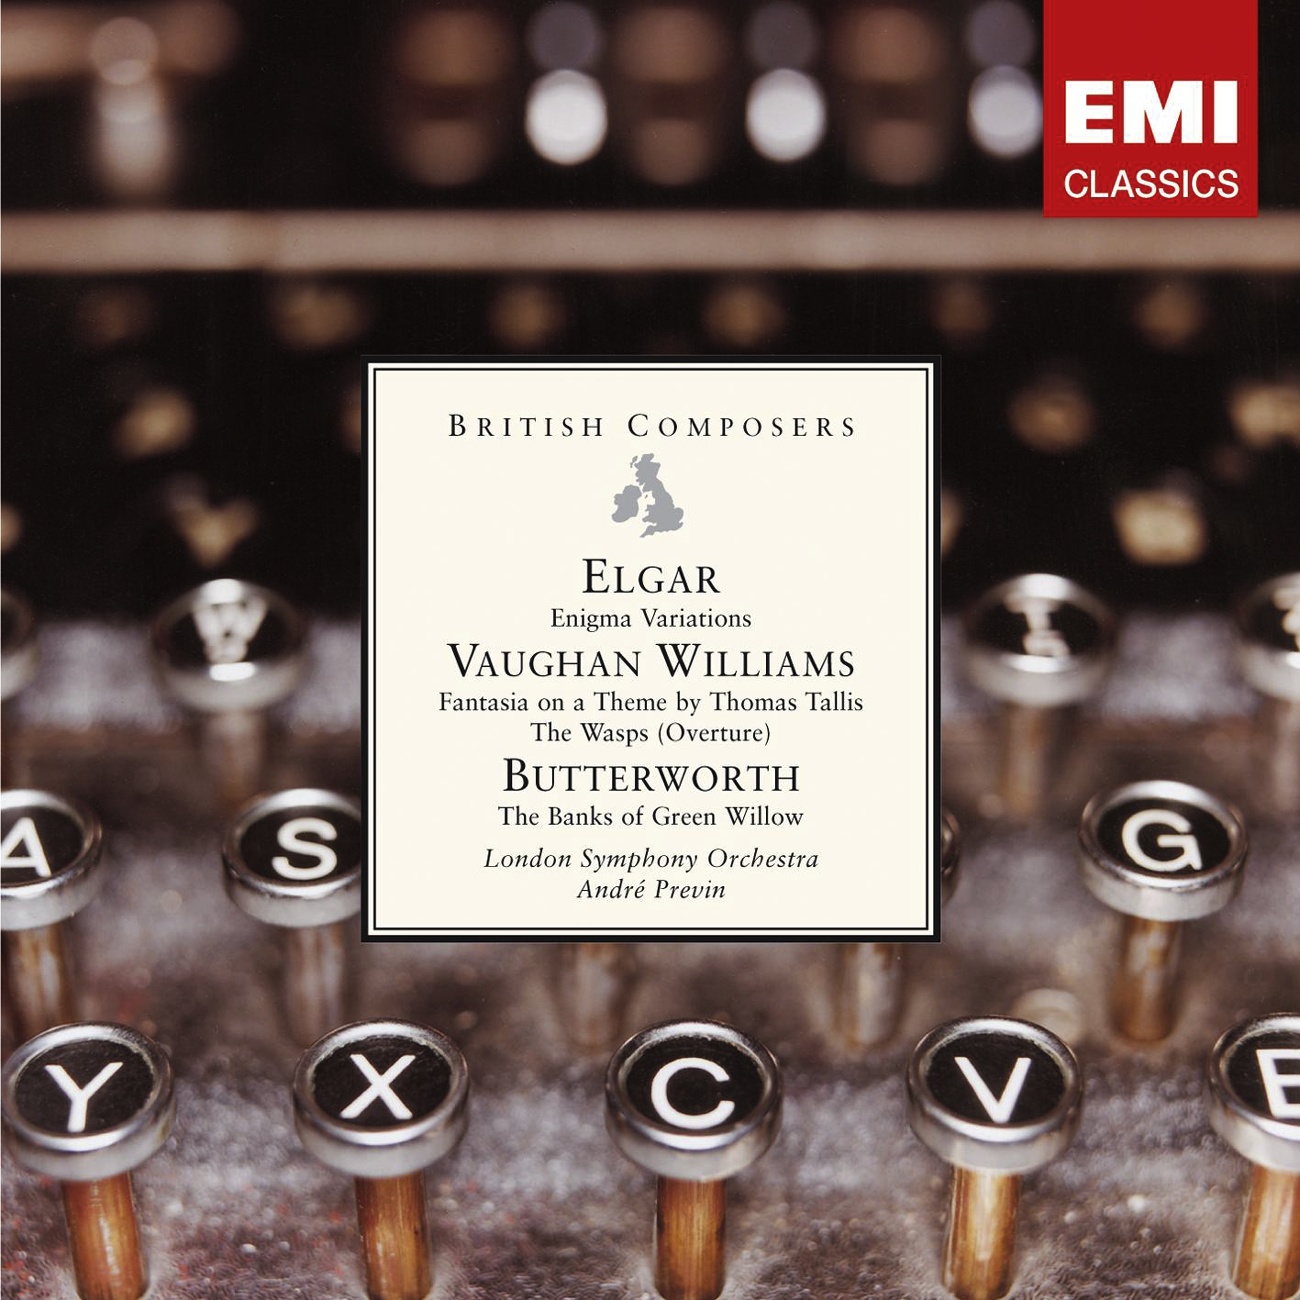 Variations on an Original Theme 'Enigma' Op. 36 (2007 Digital Remaster): IX.    Nimrod (A. J. Jaeger) (Moderato)